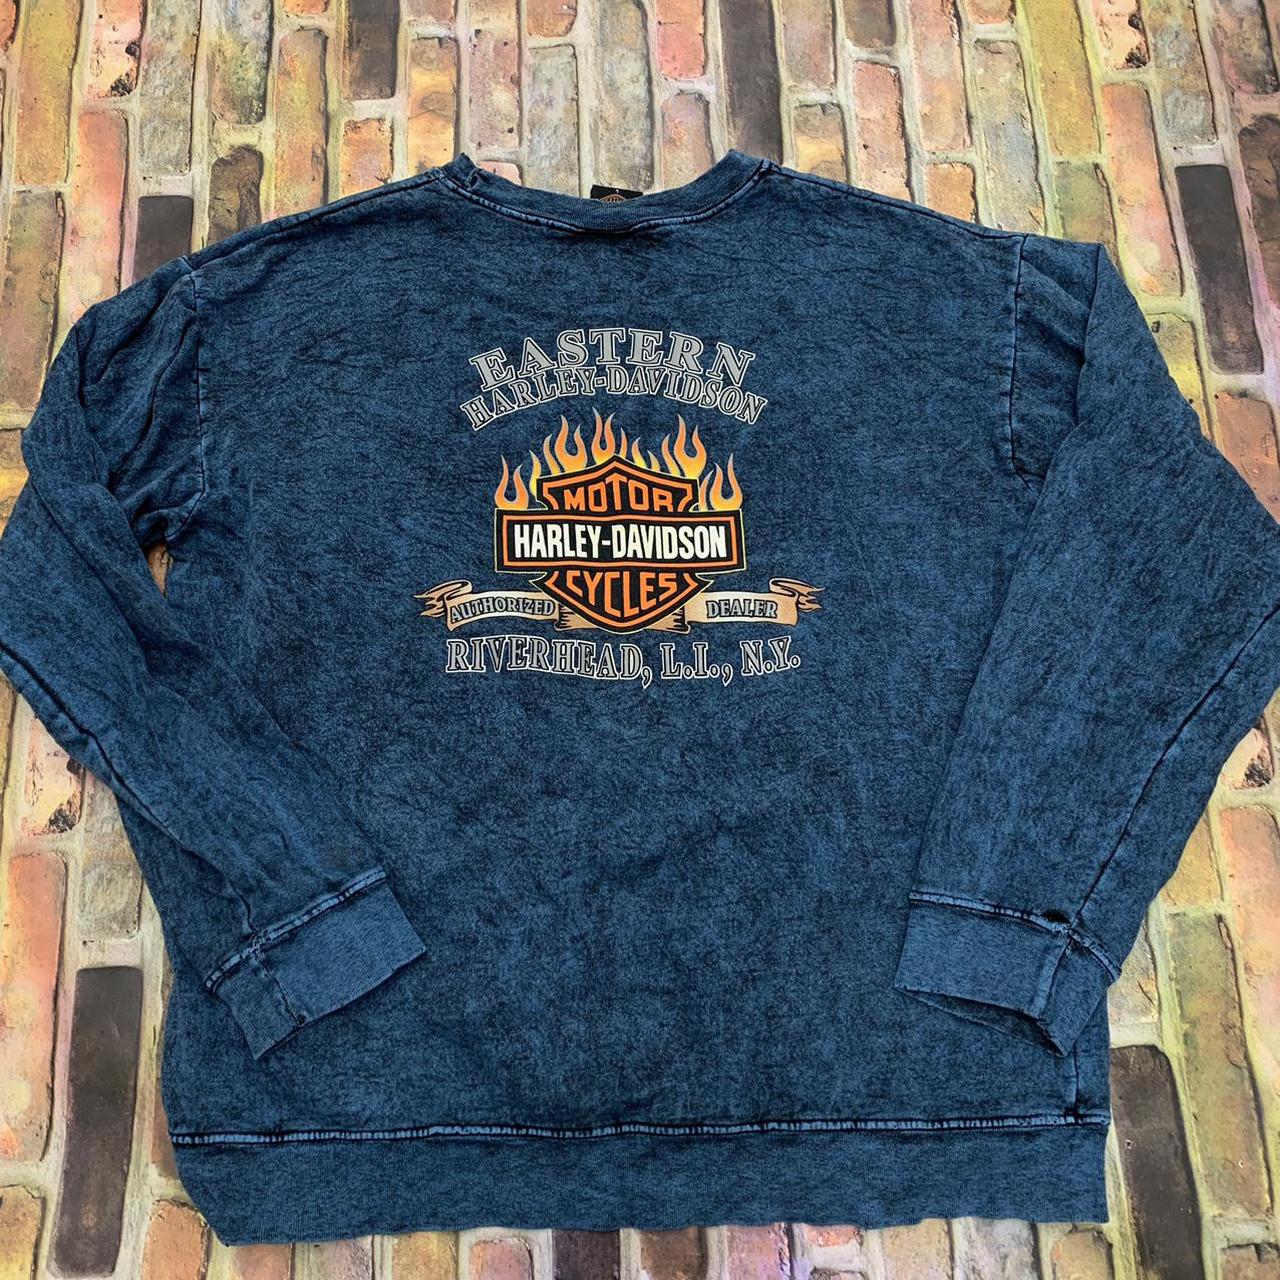 Vintage Harley Davidson sweatshirt in blue. From... - Depop